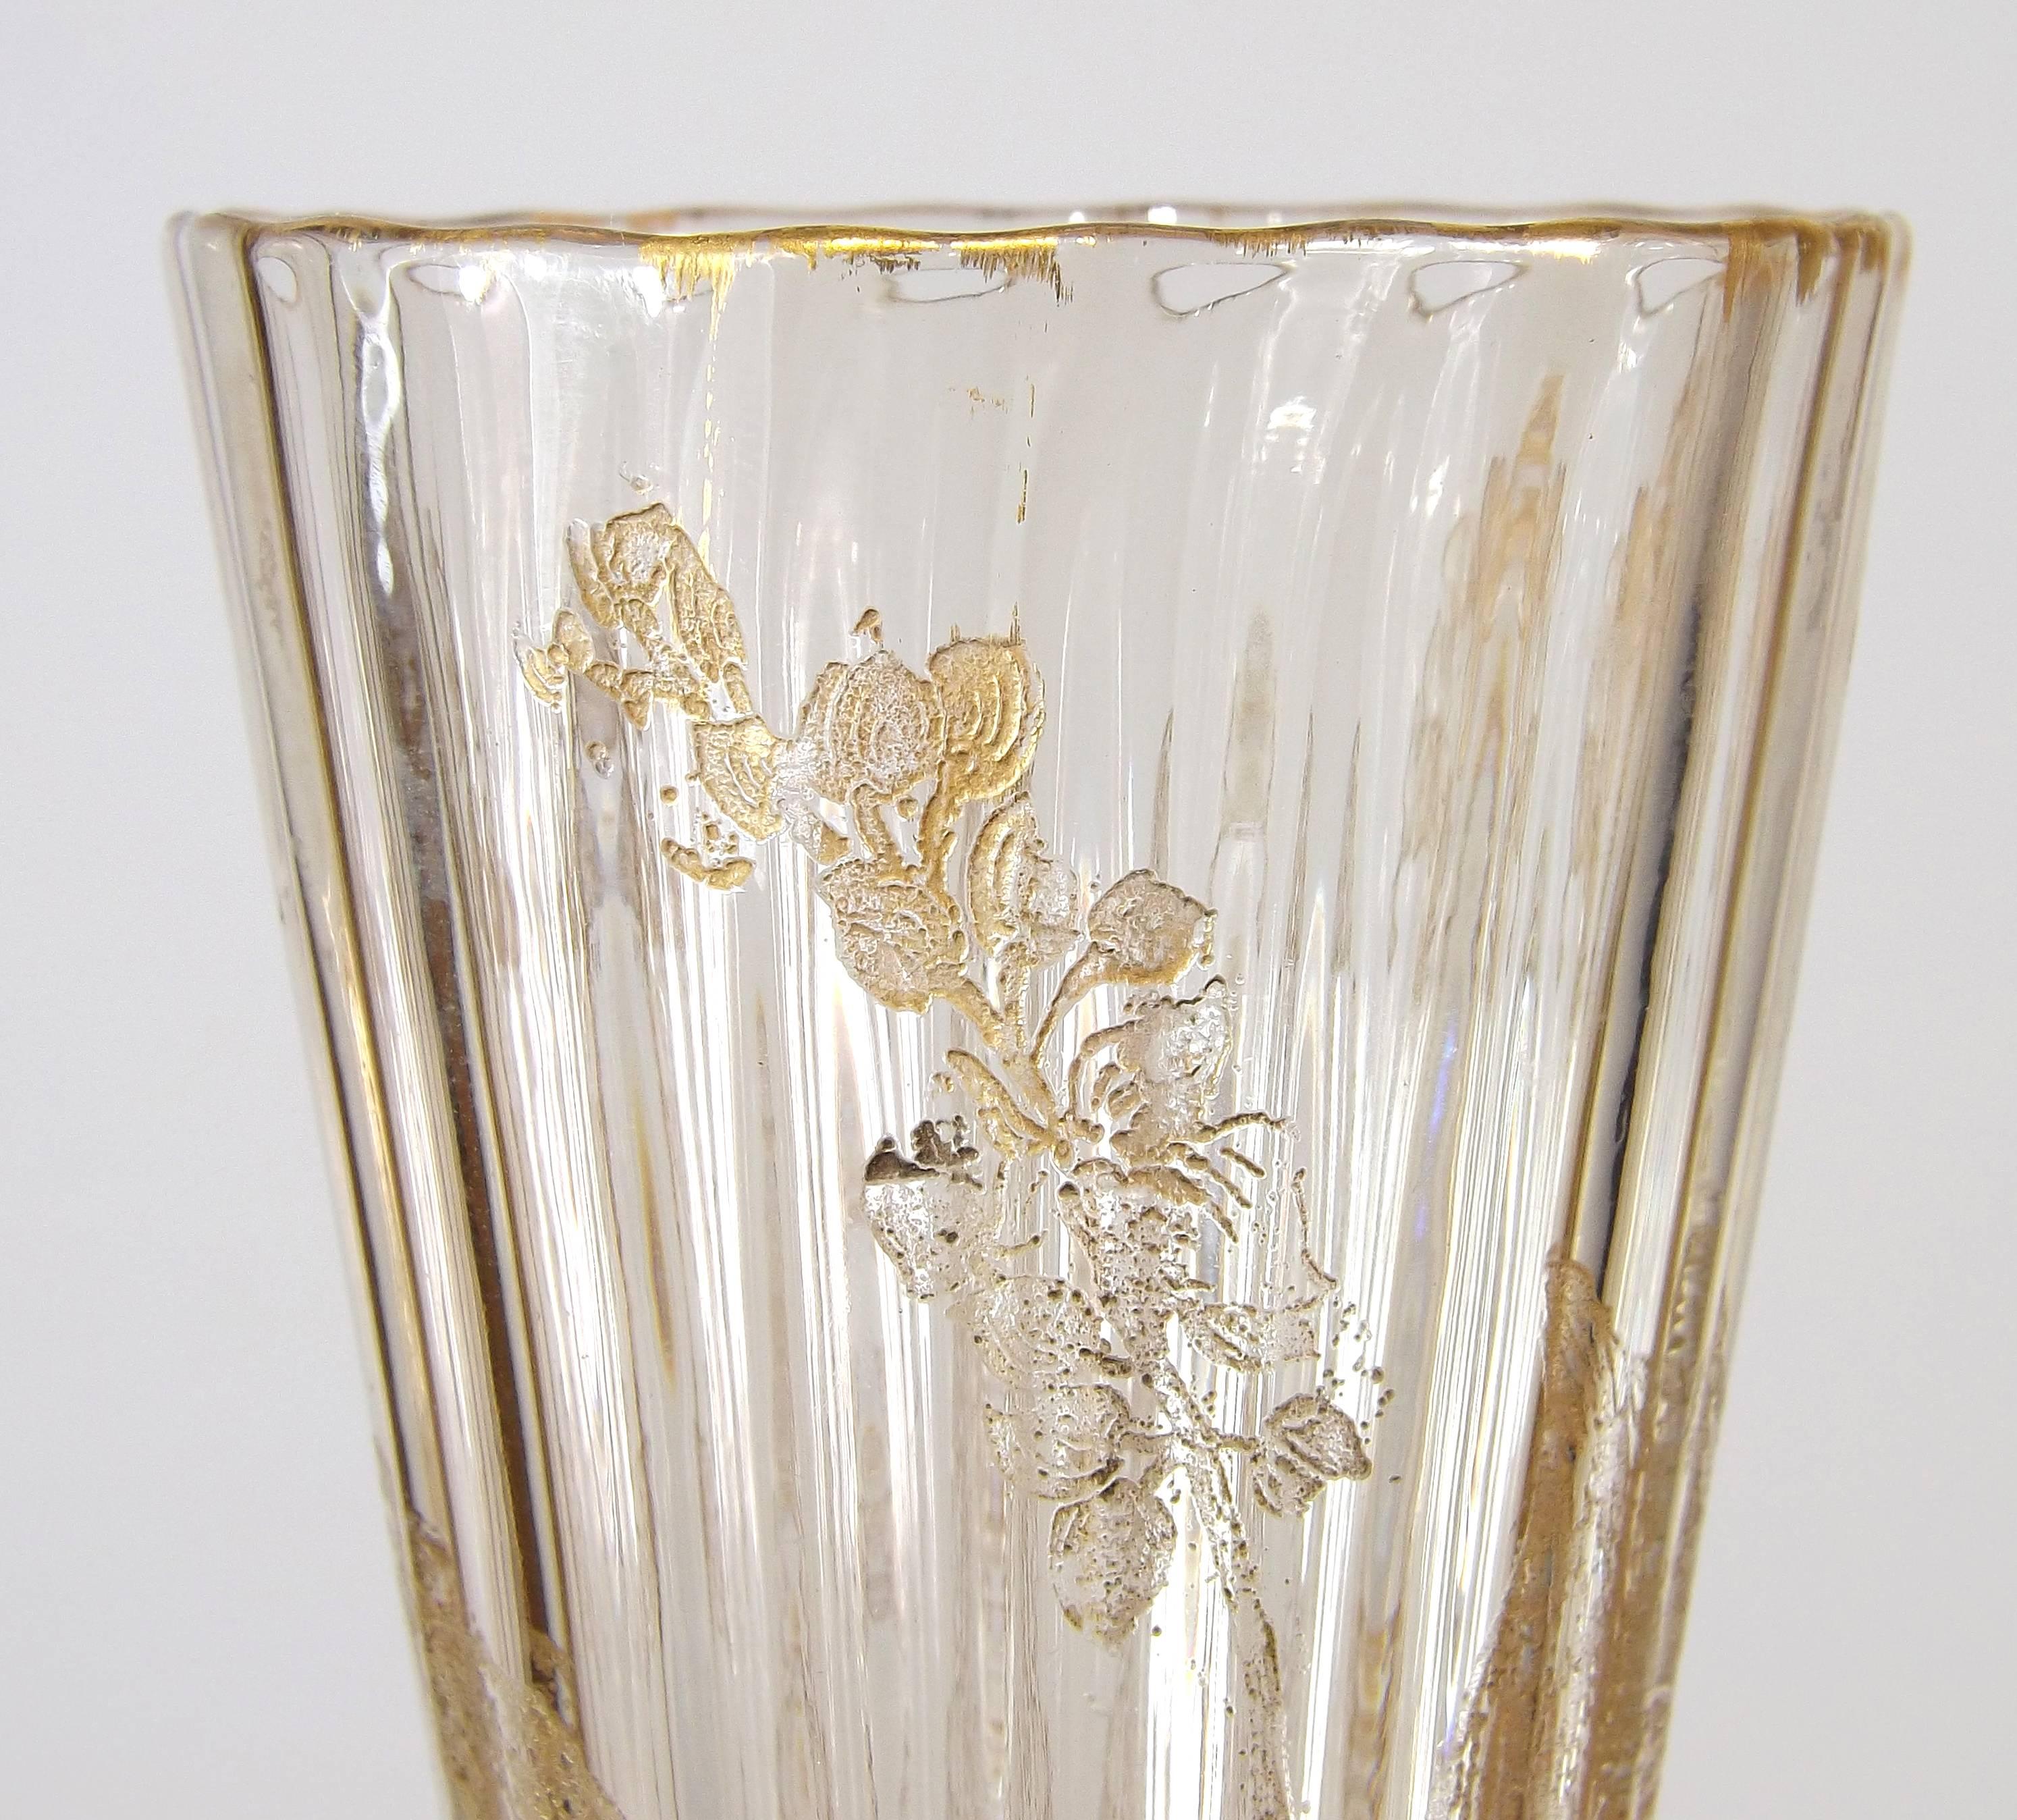 French Intaglio Gilt Decorated Emile Gallé Cabinet Vase, circa 1880 For Sale